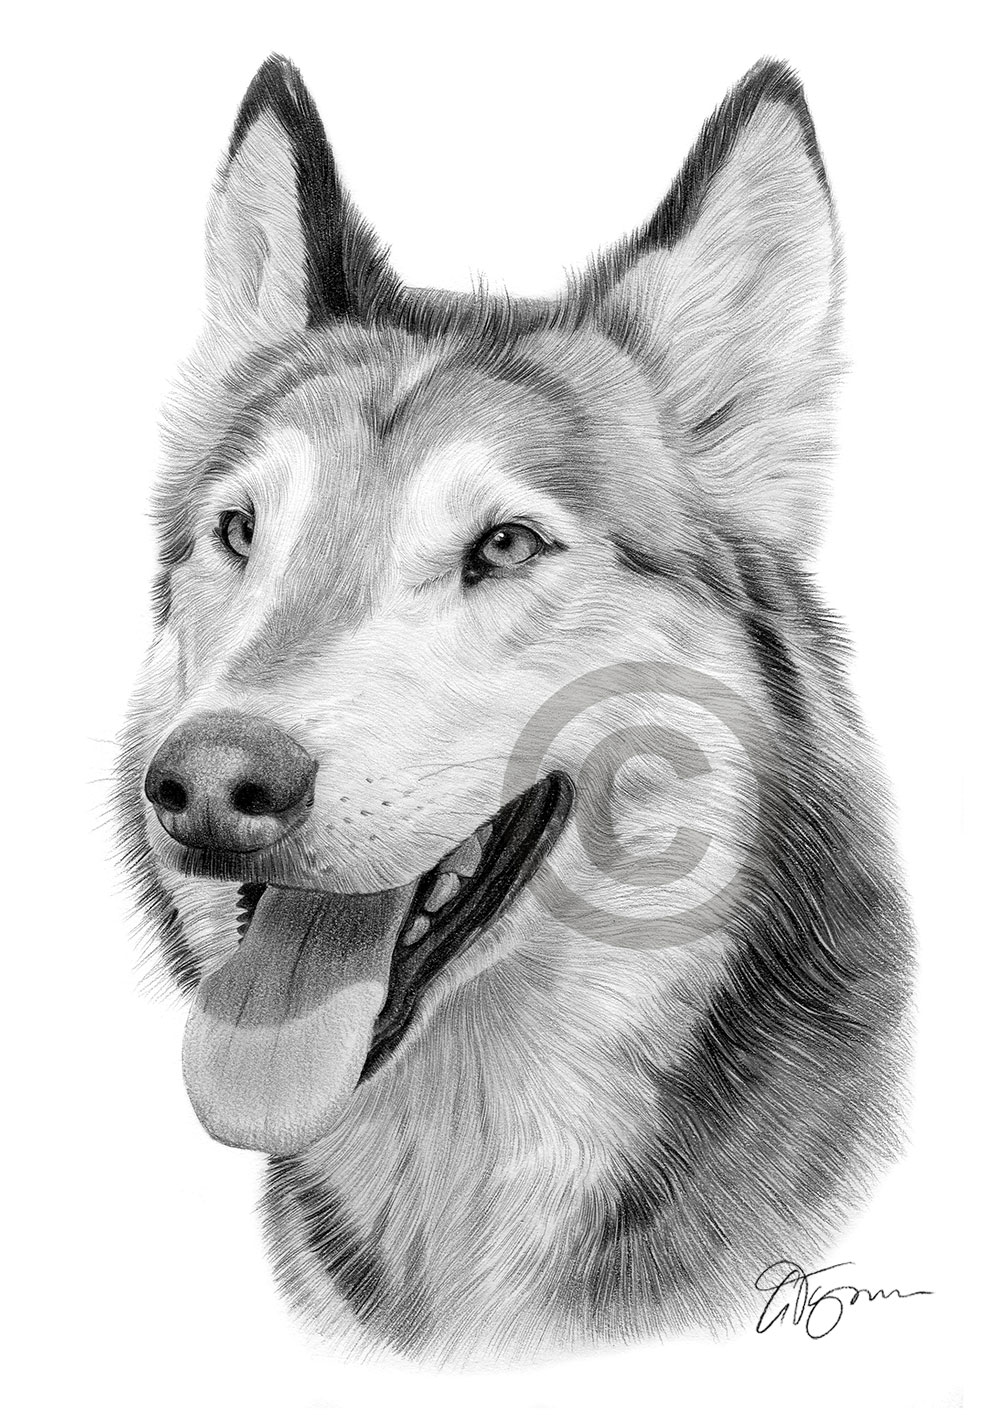 Pencil drawing portrait of a grey wolf by artist Gary Tymon